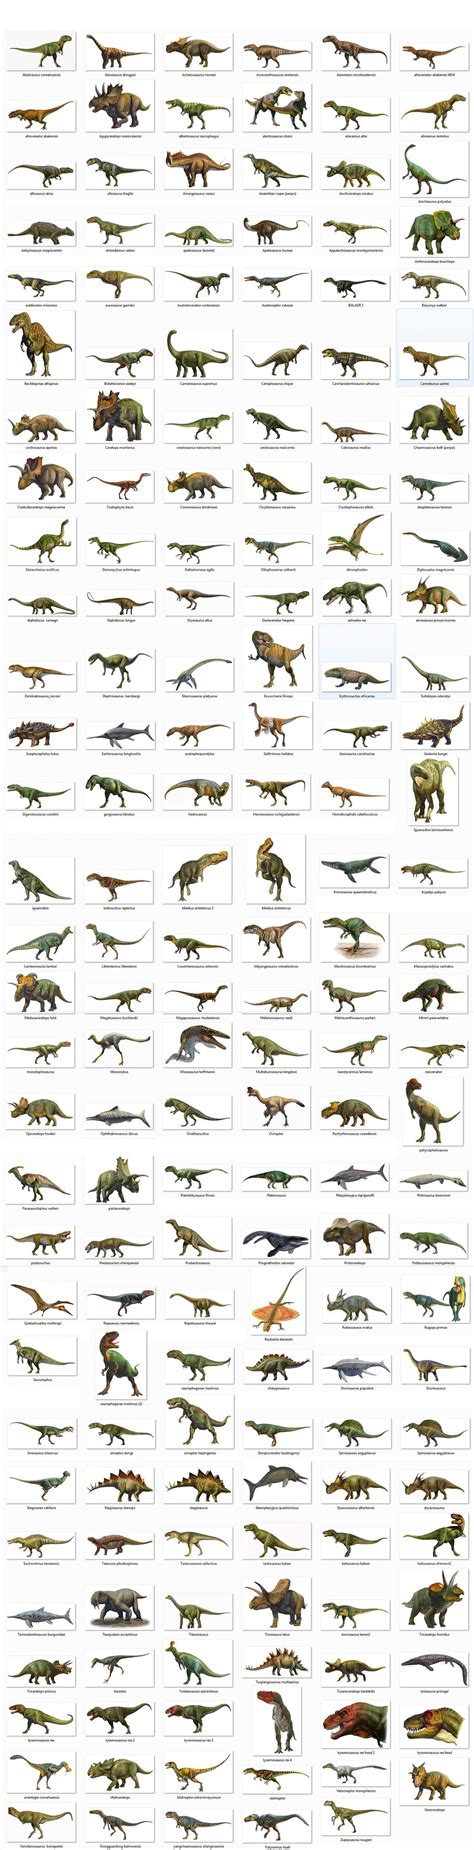 Dinosaurs Size Comparison Charts Pixelsham Dinosaur Animation Images